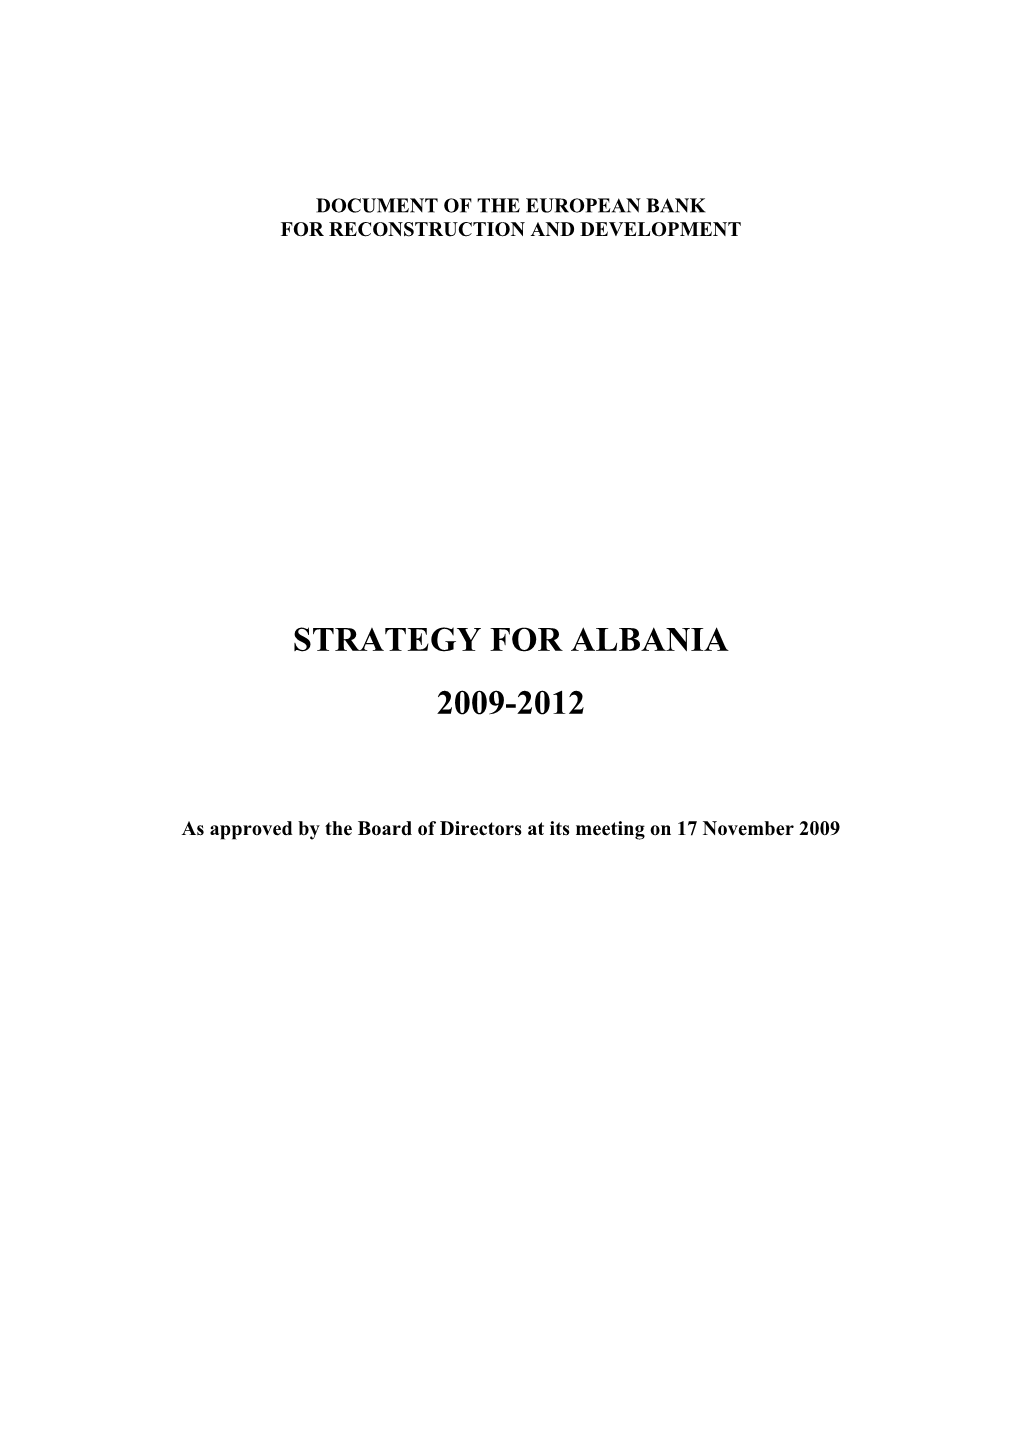 Albania Country Strategy [EBRD